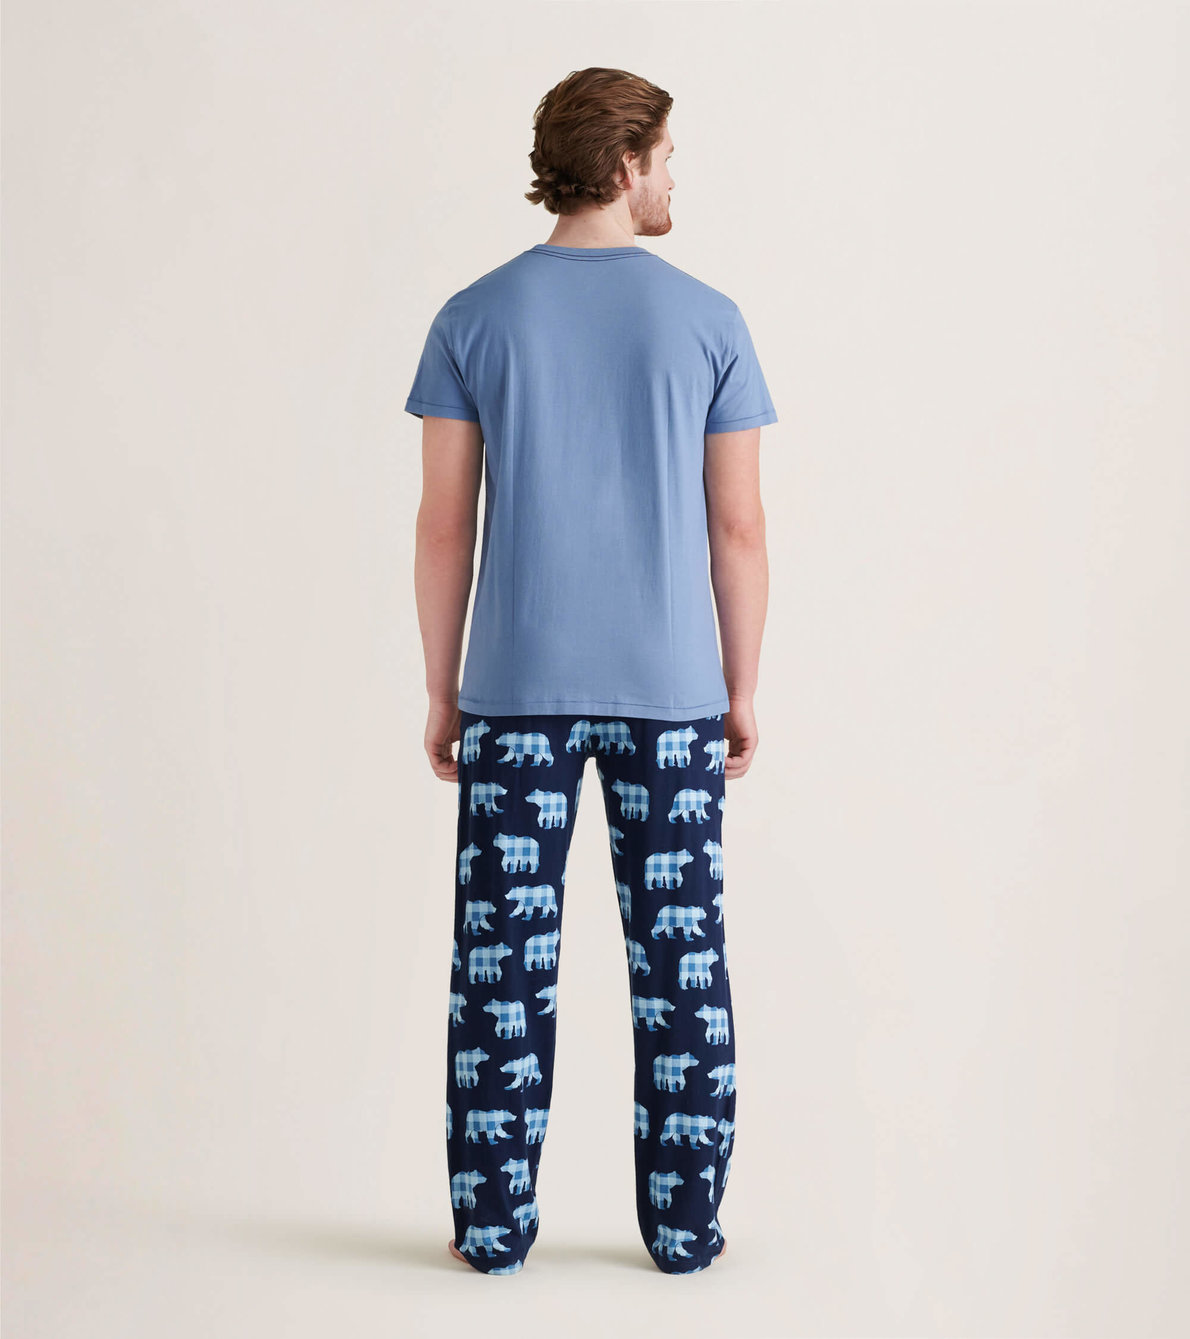 View larger image of Papa Bear Men's Tee and Pants Pajama Separates